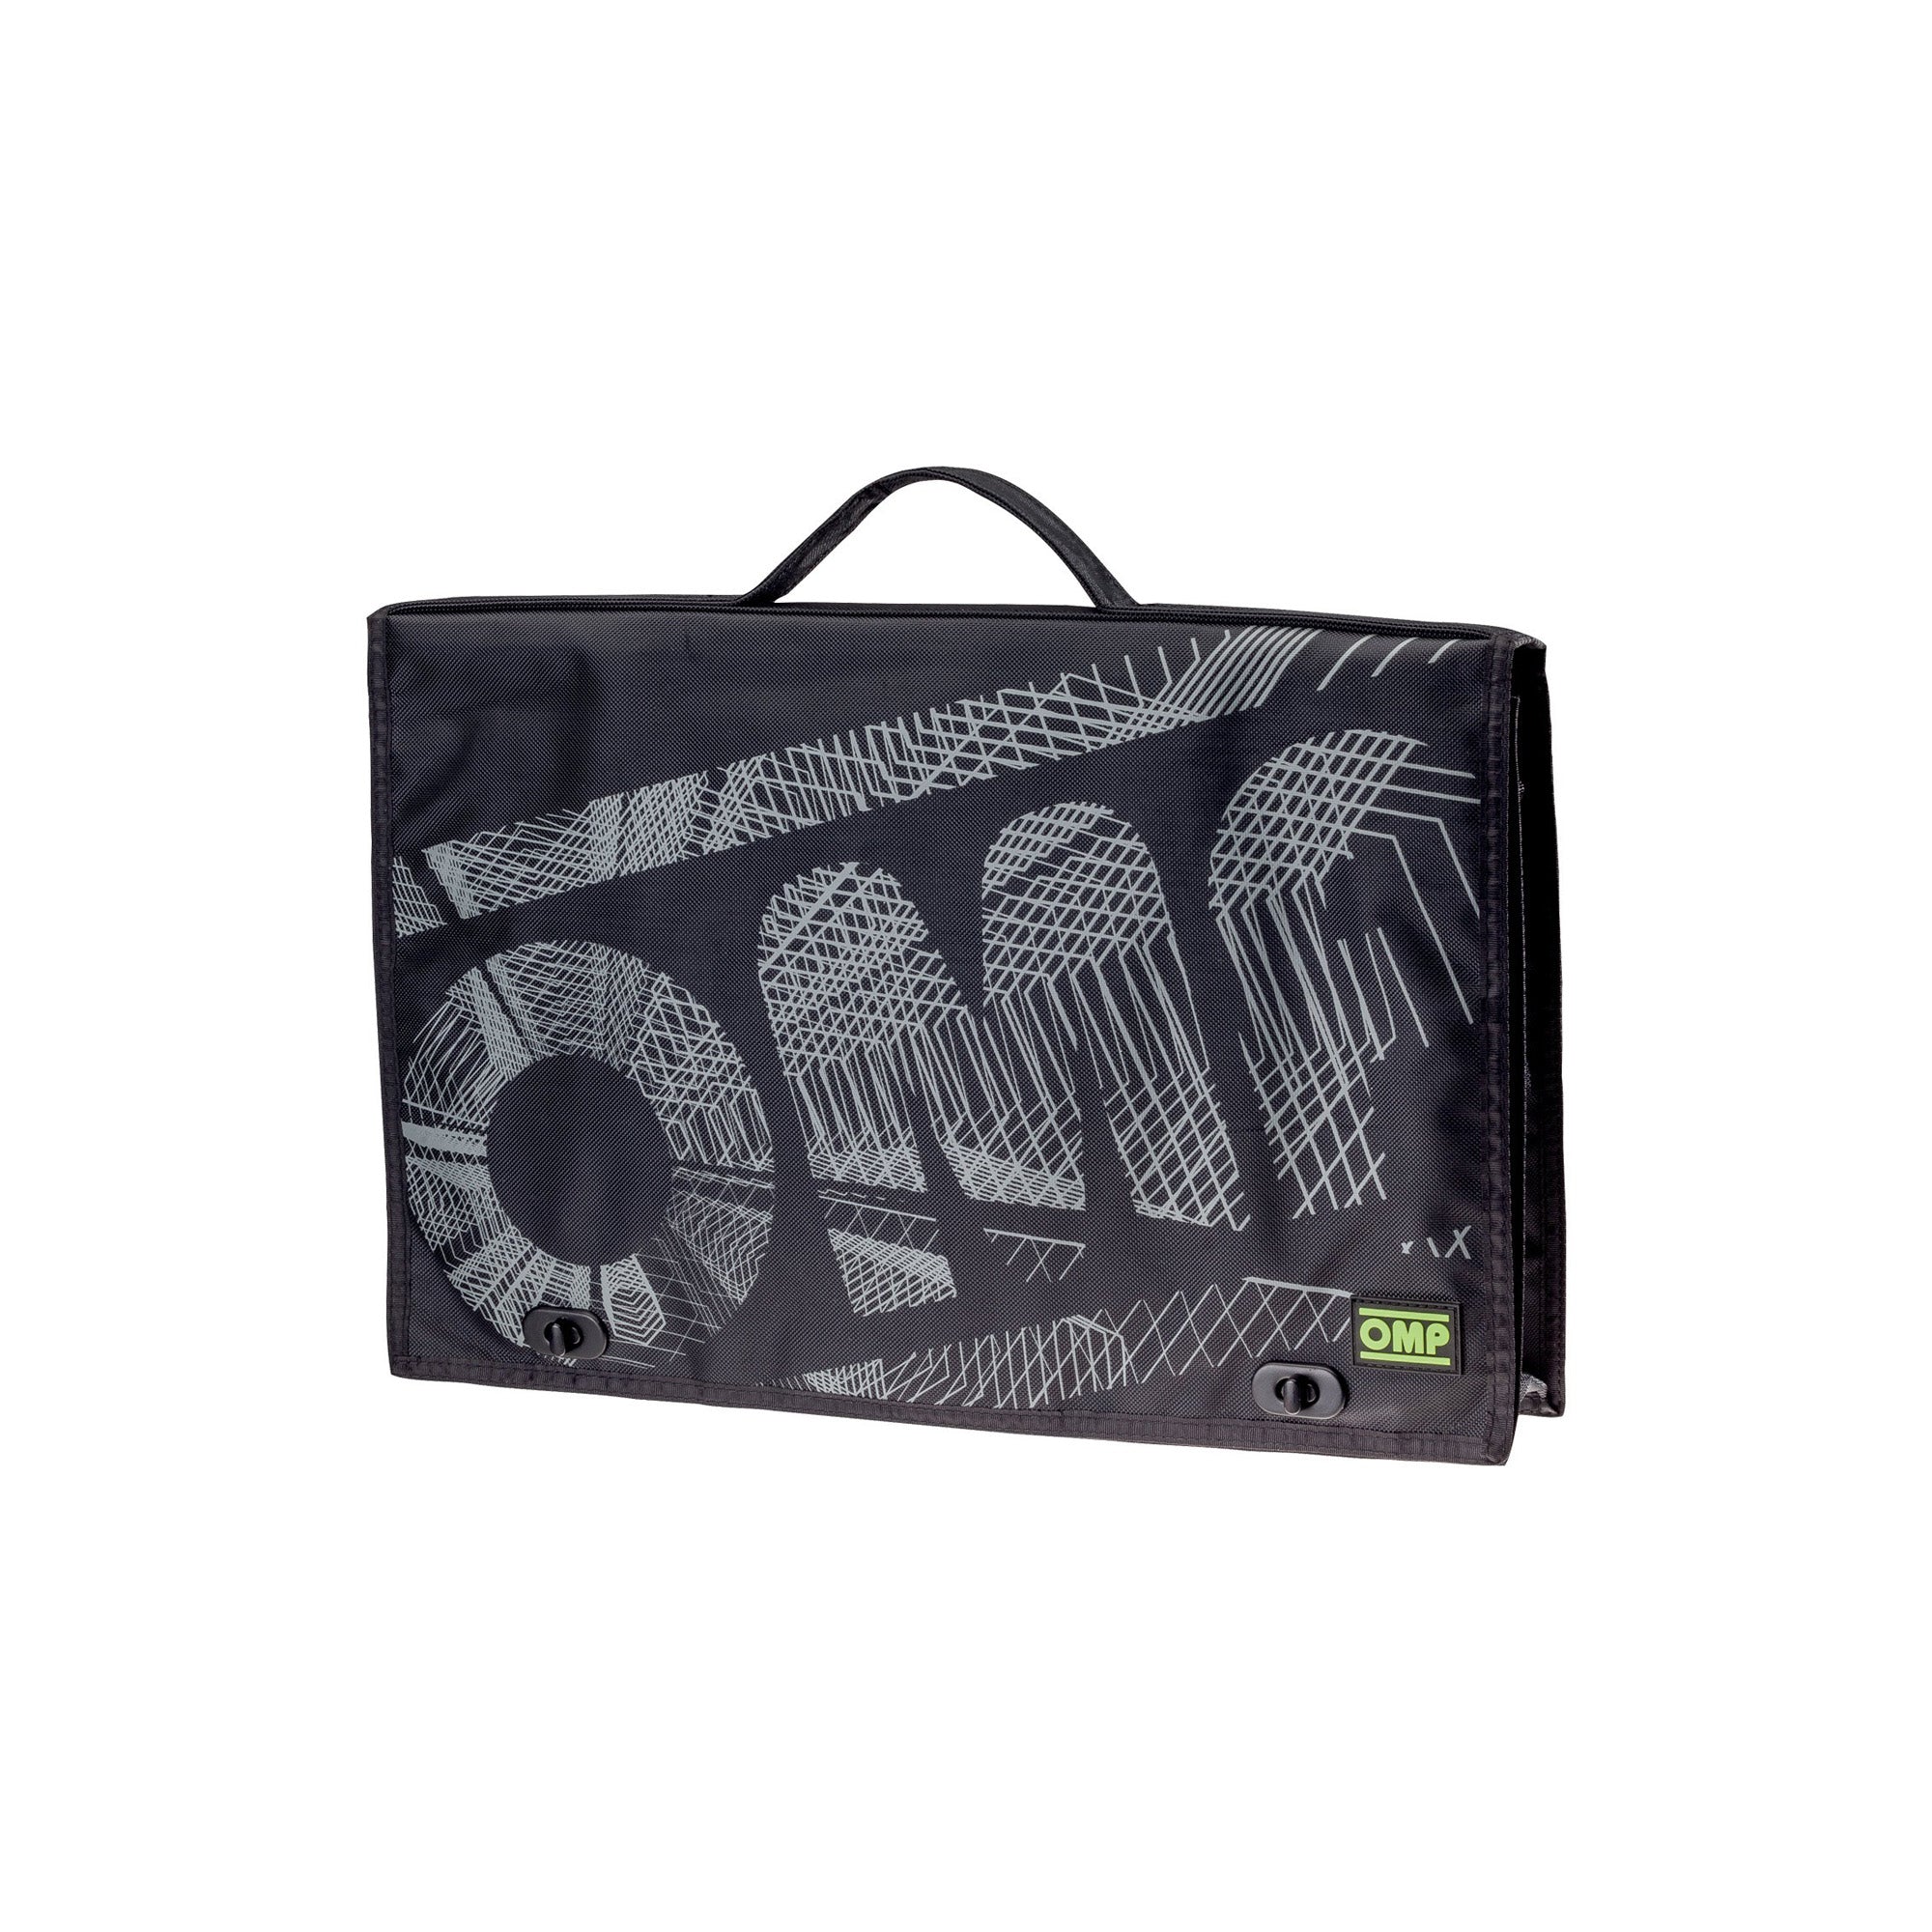 OMP Co-Driver Bag